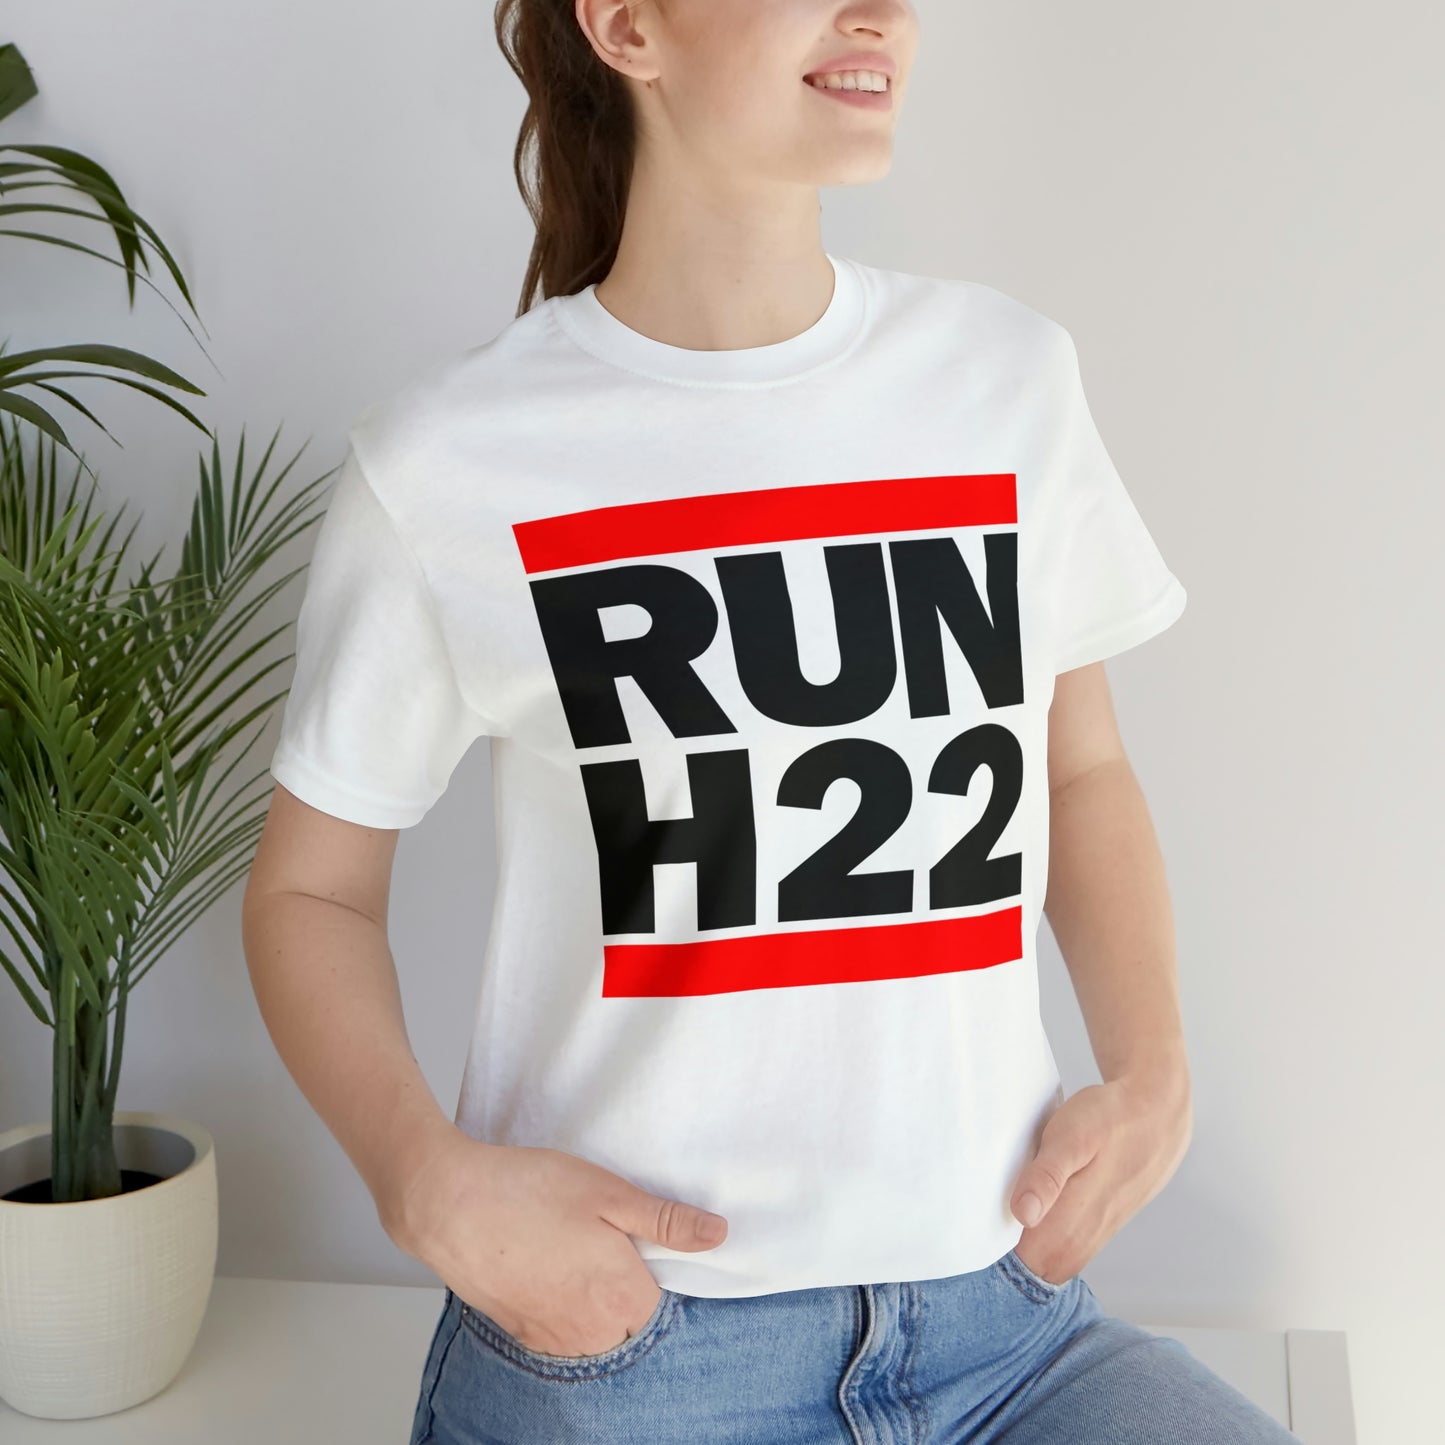 Run H22  Shirt